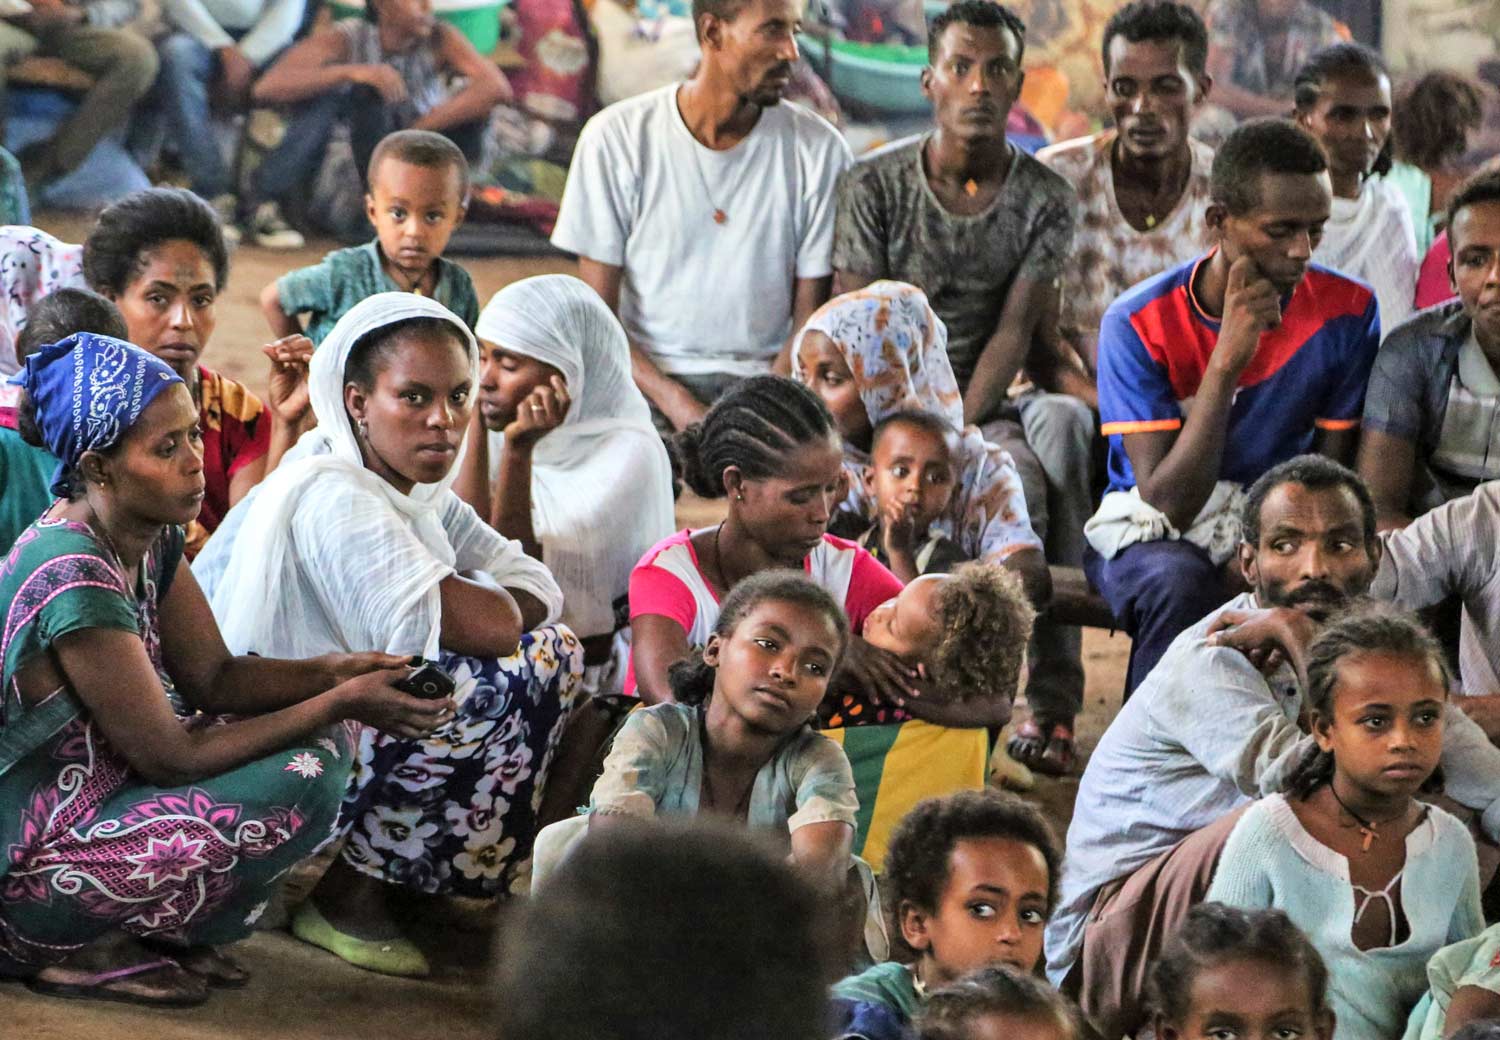 Jente fra Etiopia. Jenter i krise.